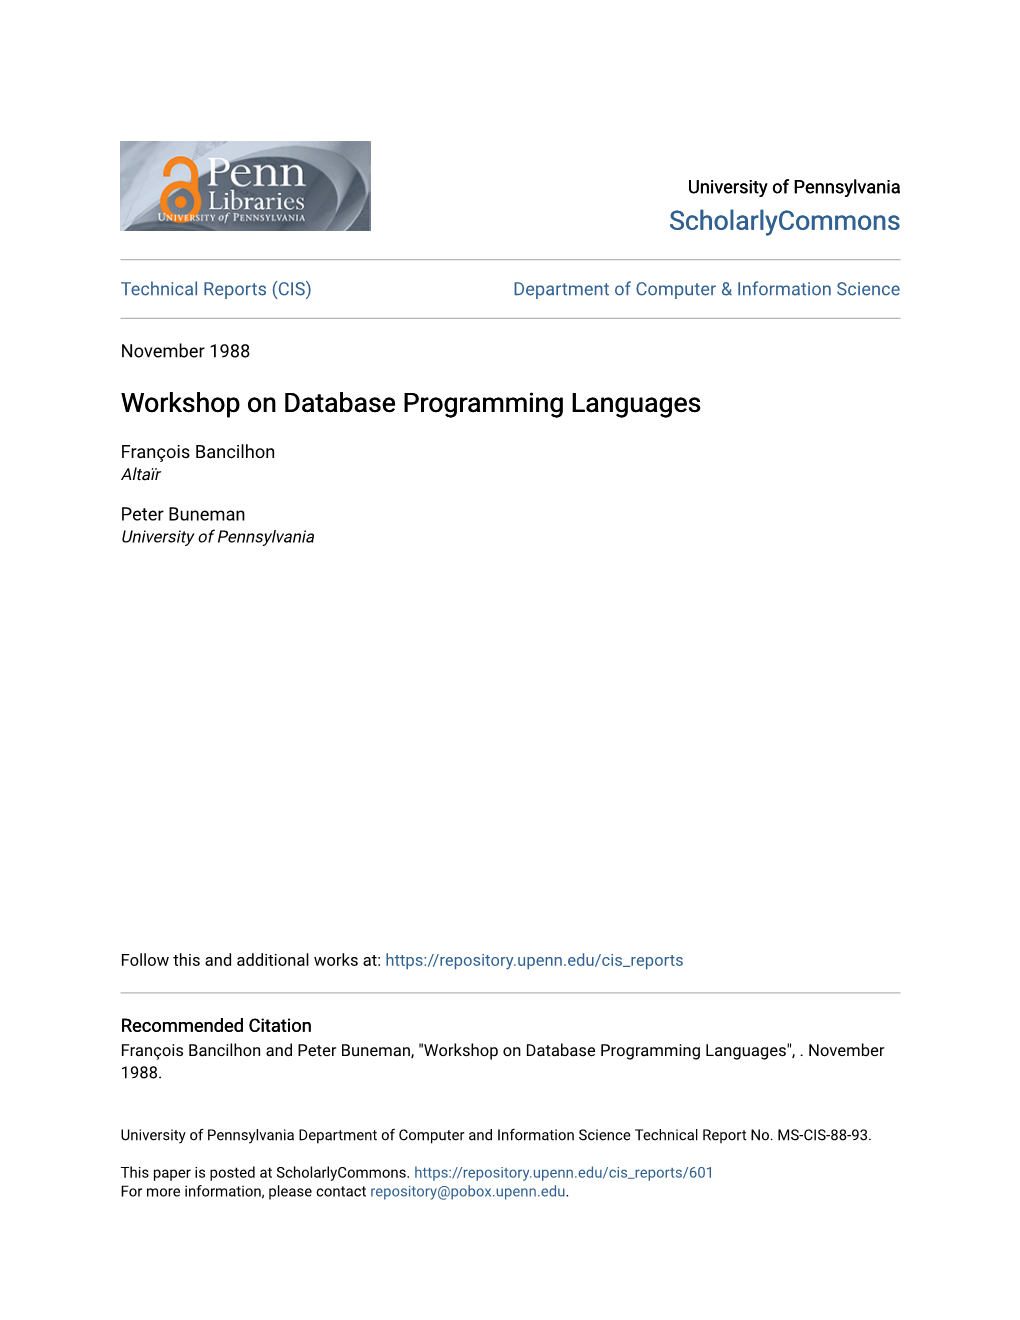 Workshop on Database Programming Languages